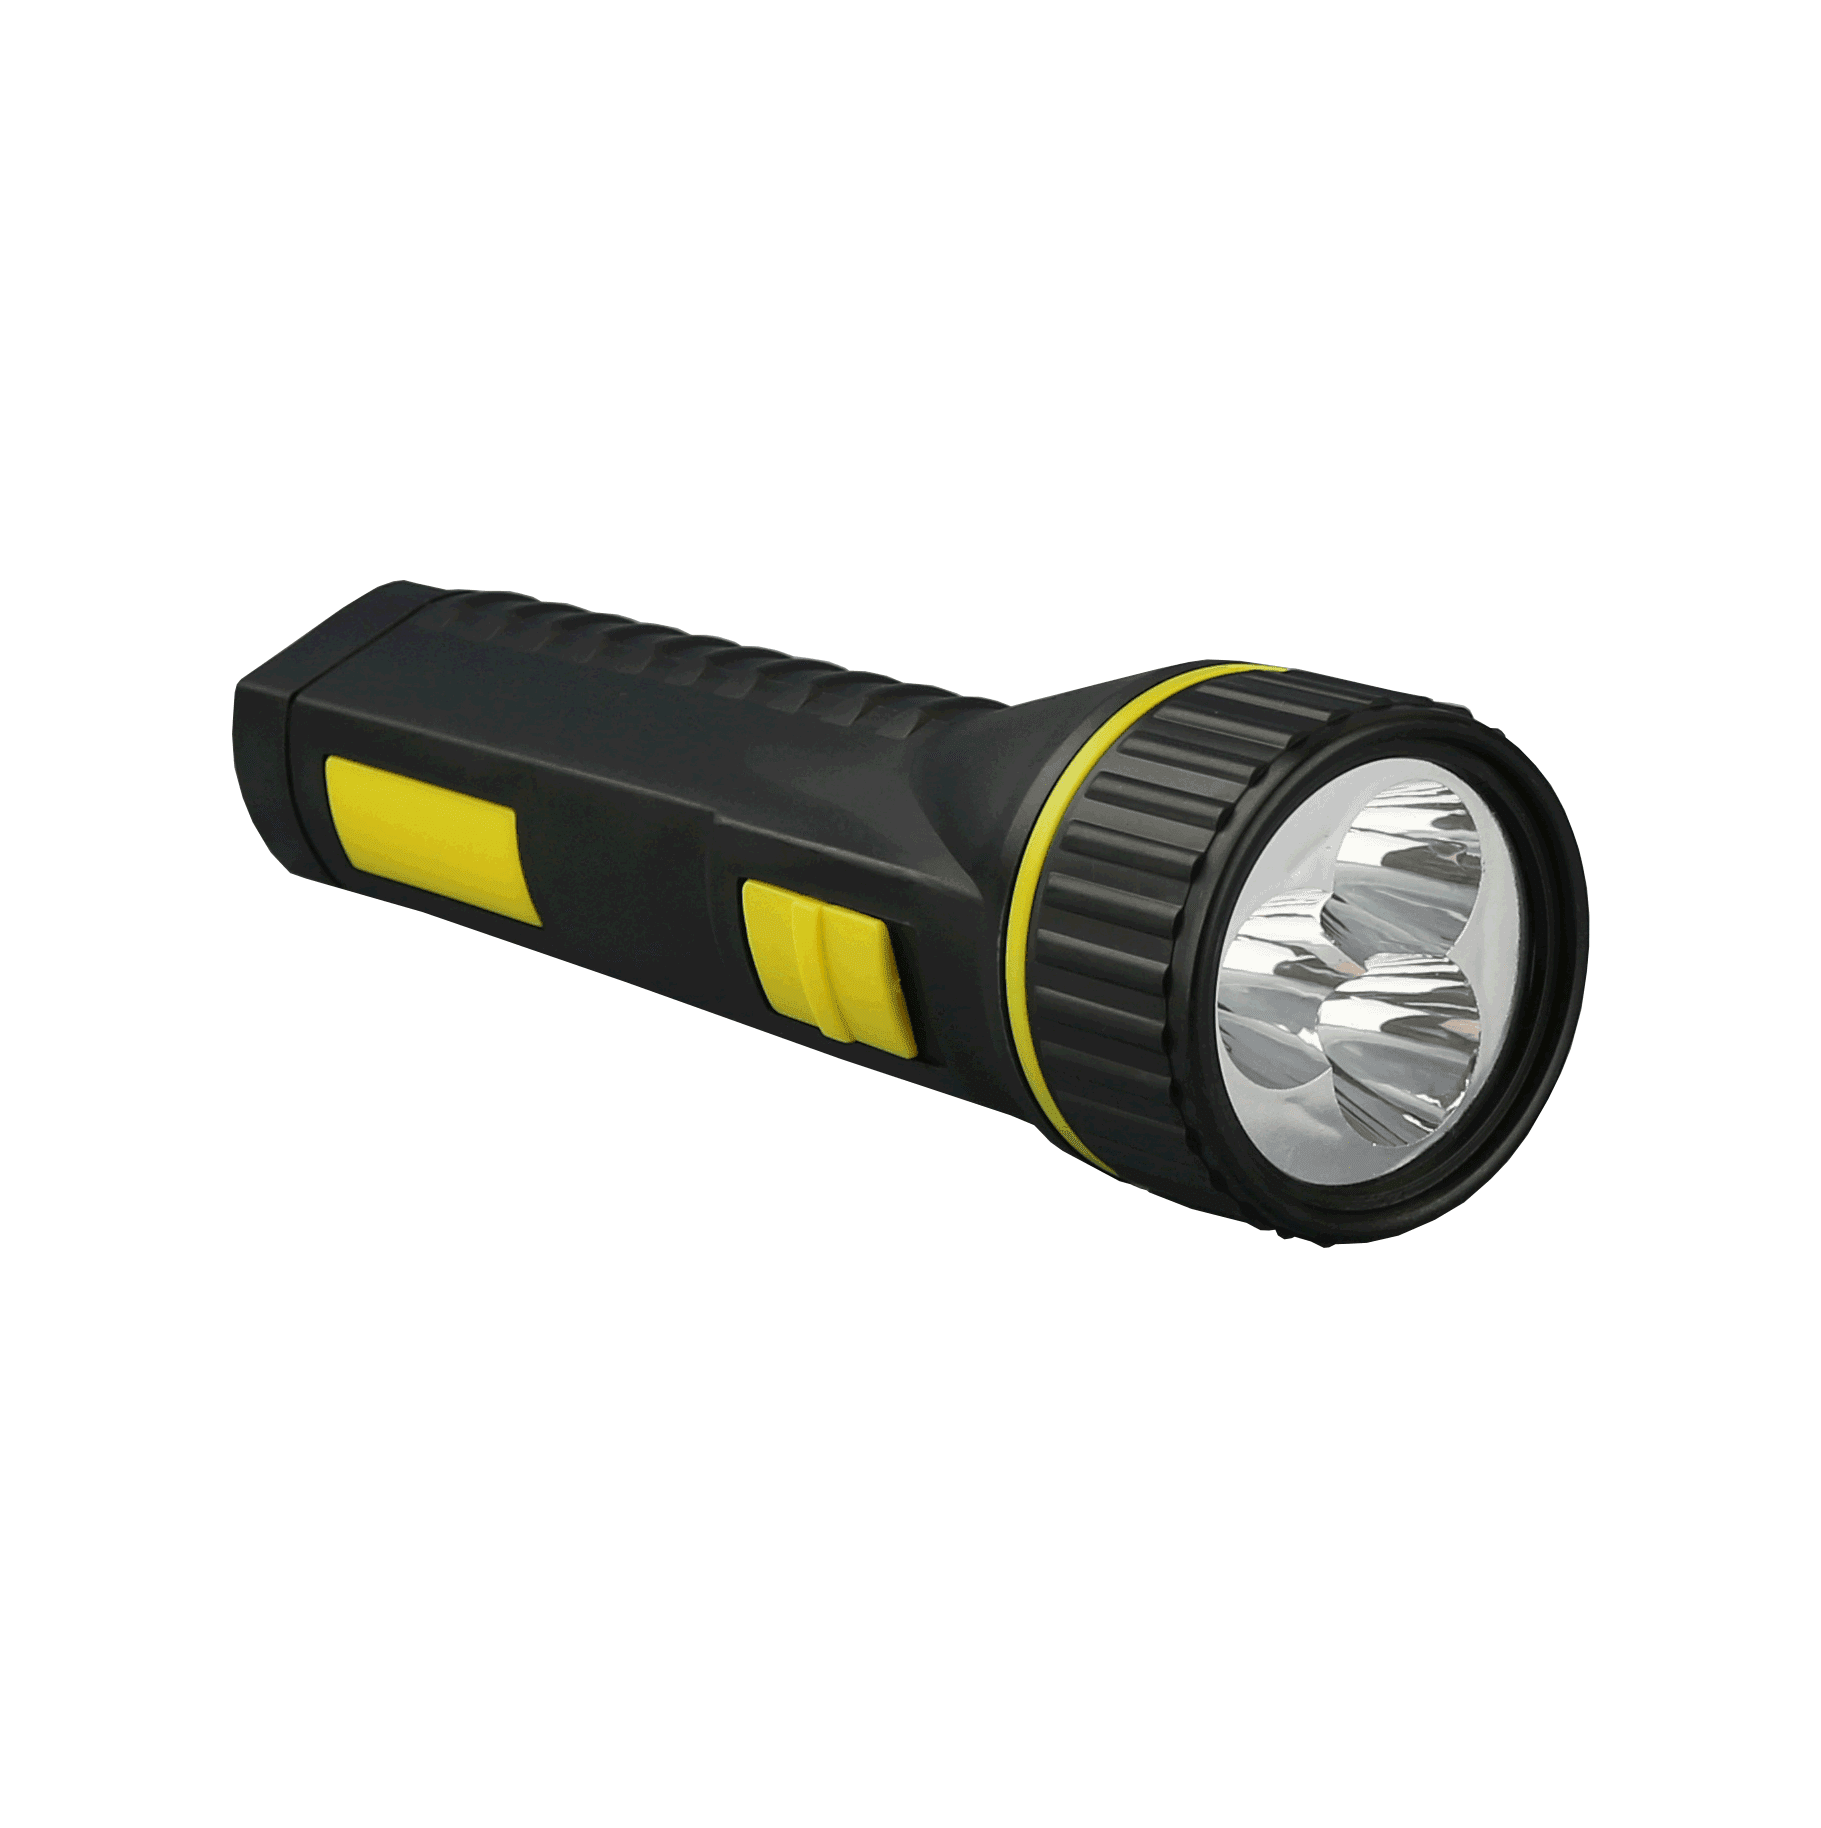 Battery Free Flashlight - The American Civil Defense Association